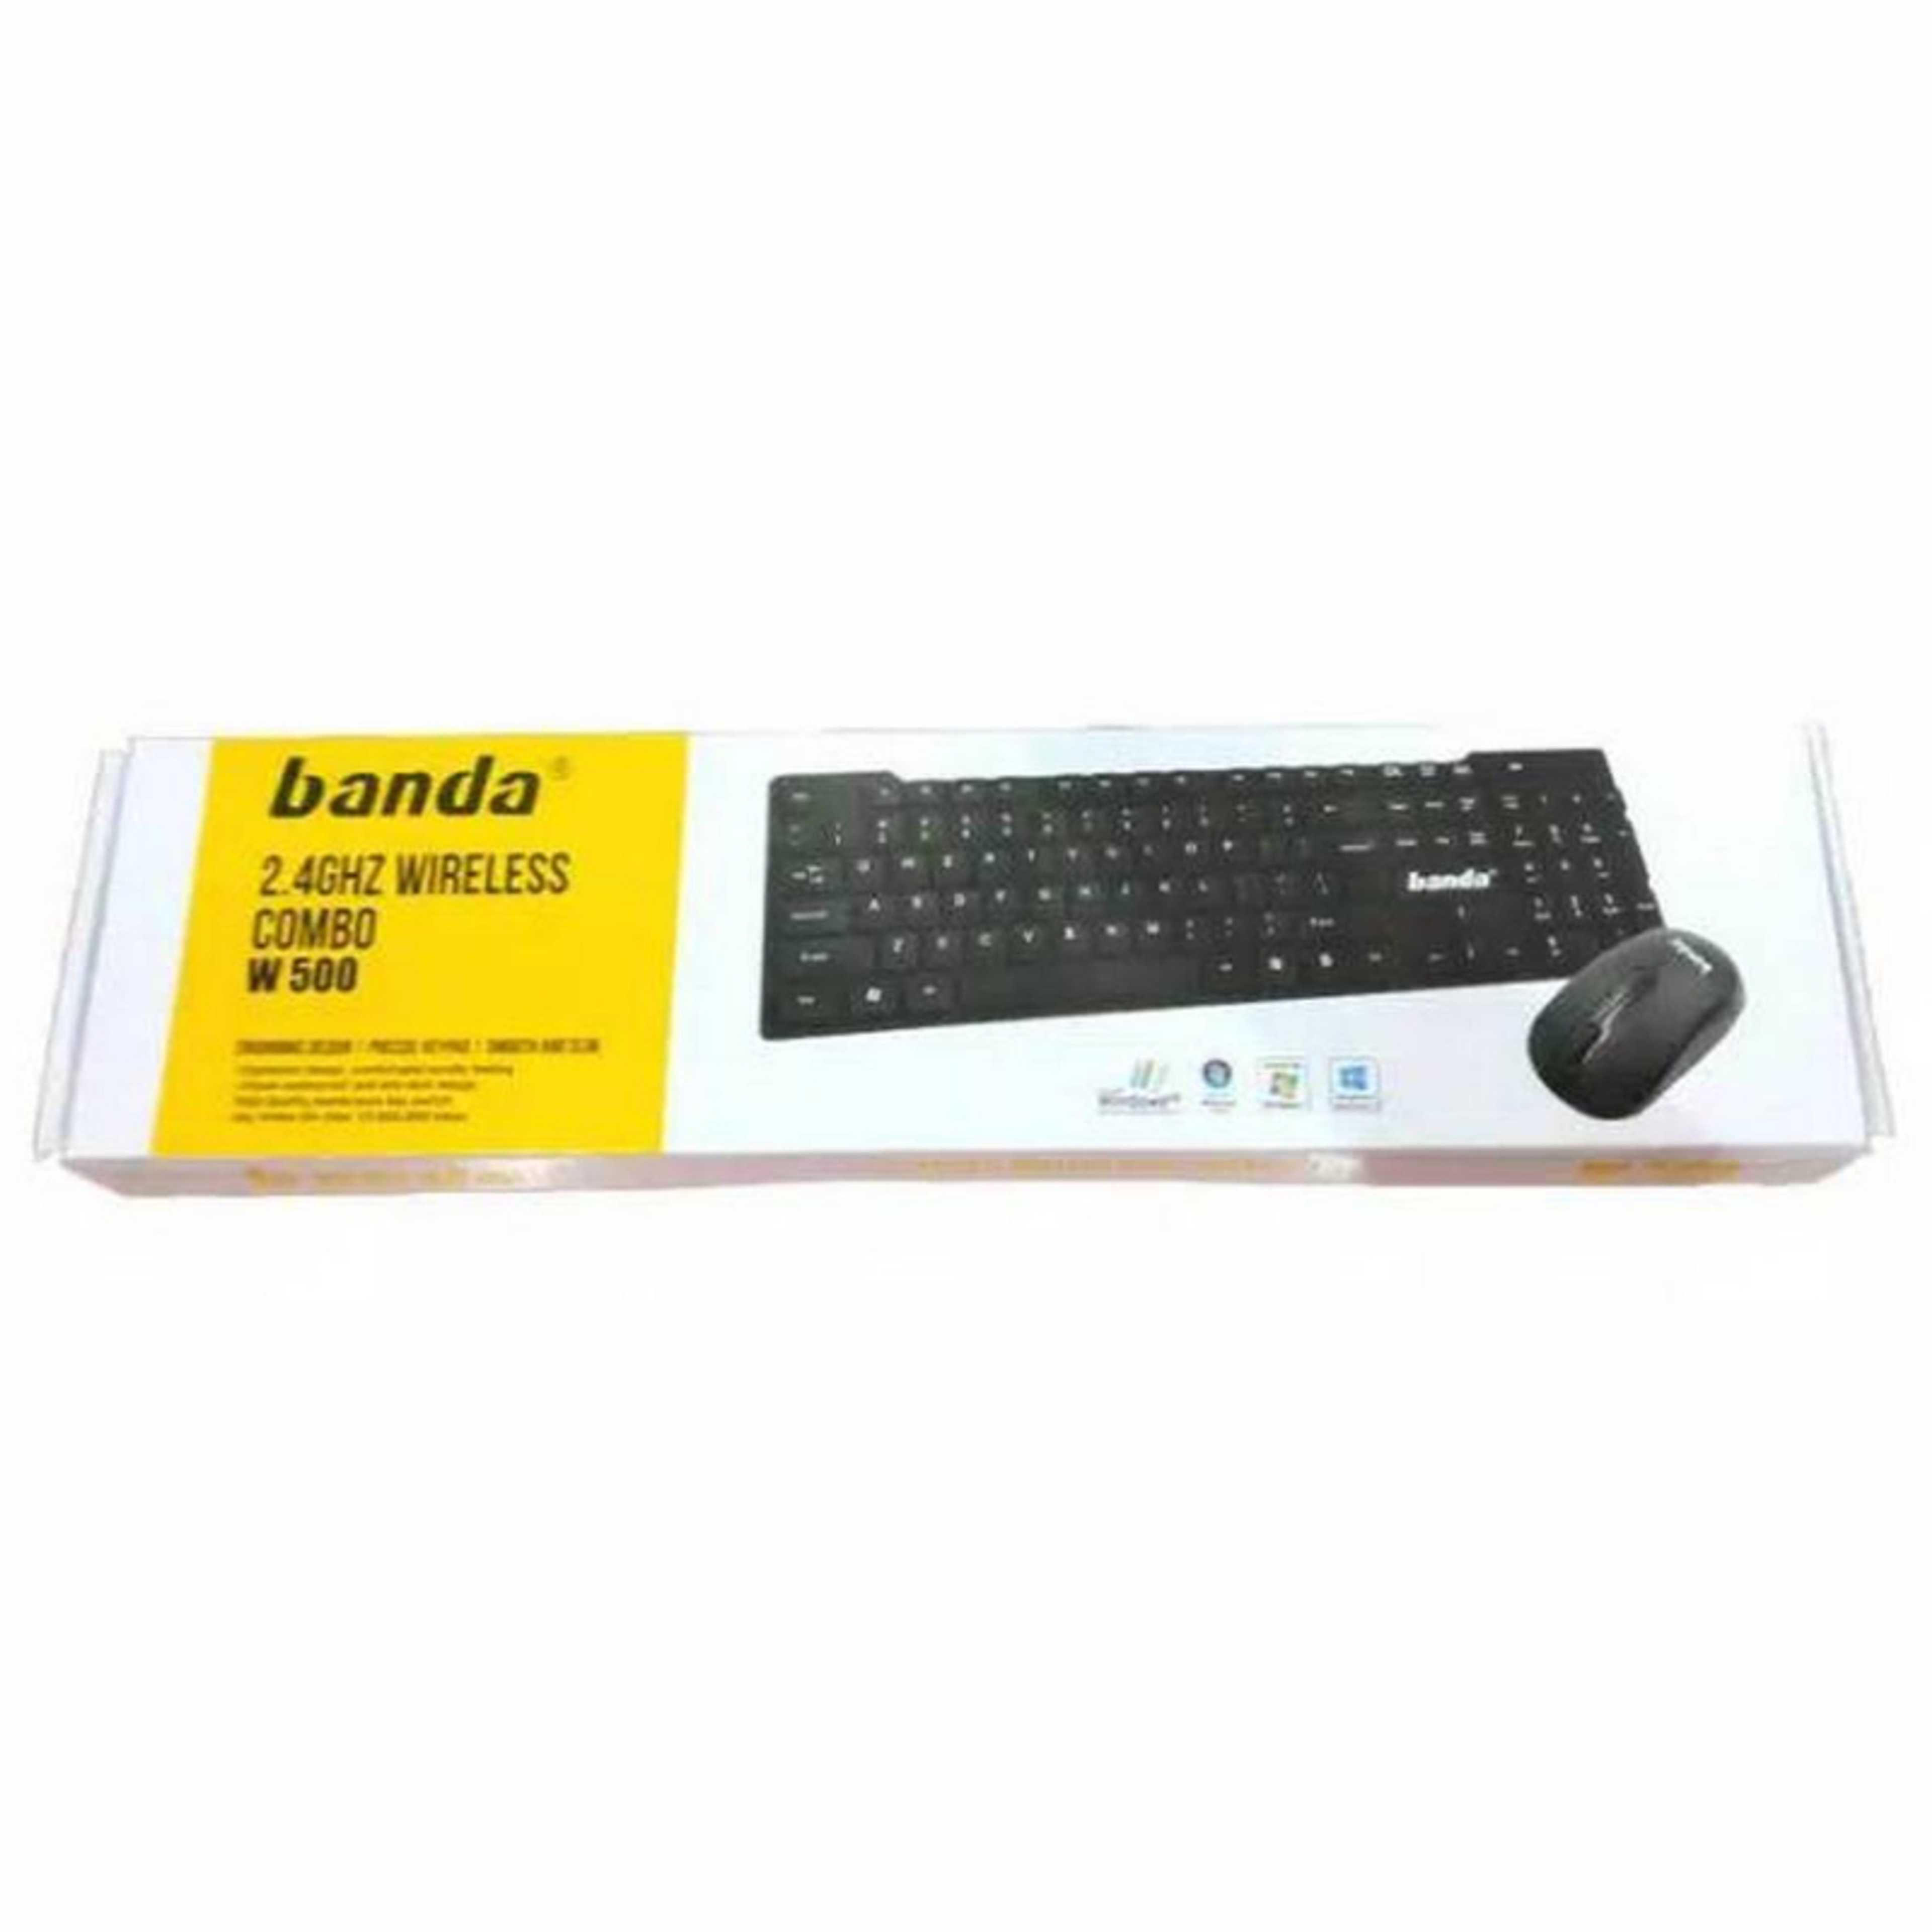 W500 Banda 2.4 GHz Wireless Combo Keyboard Mouse